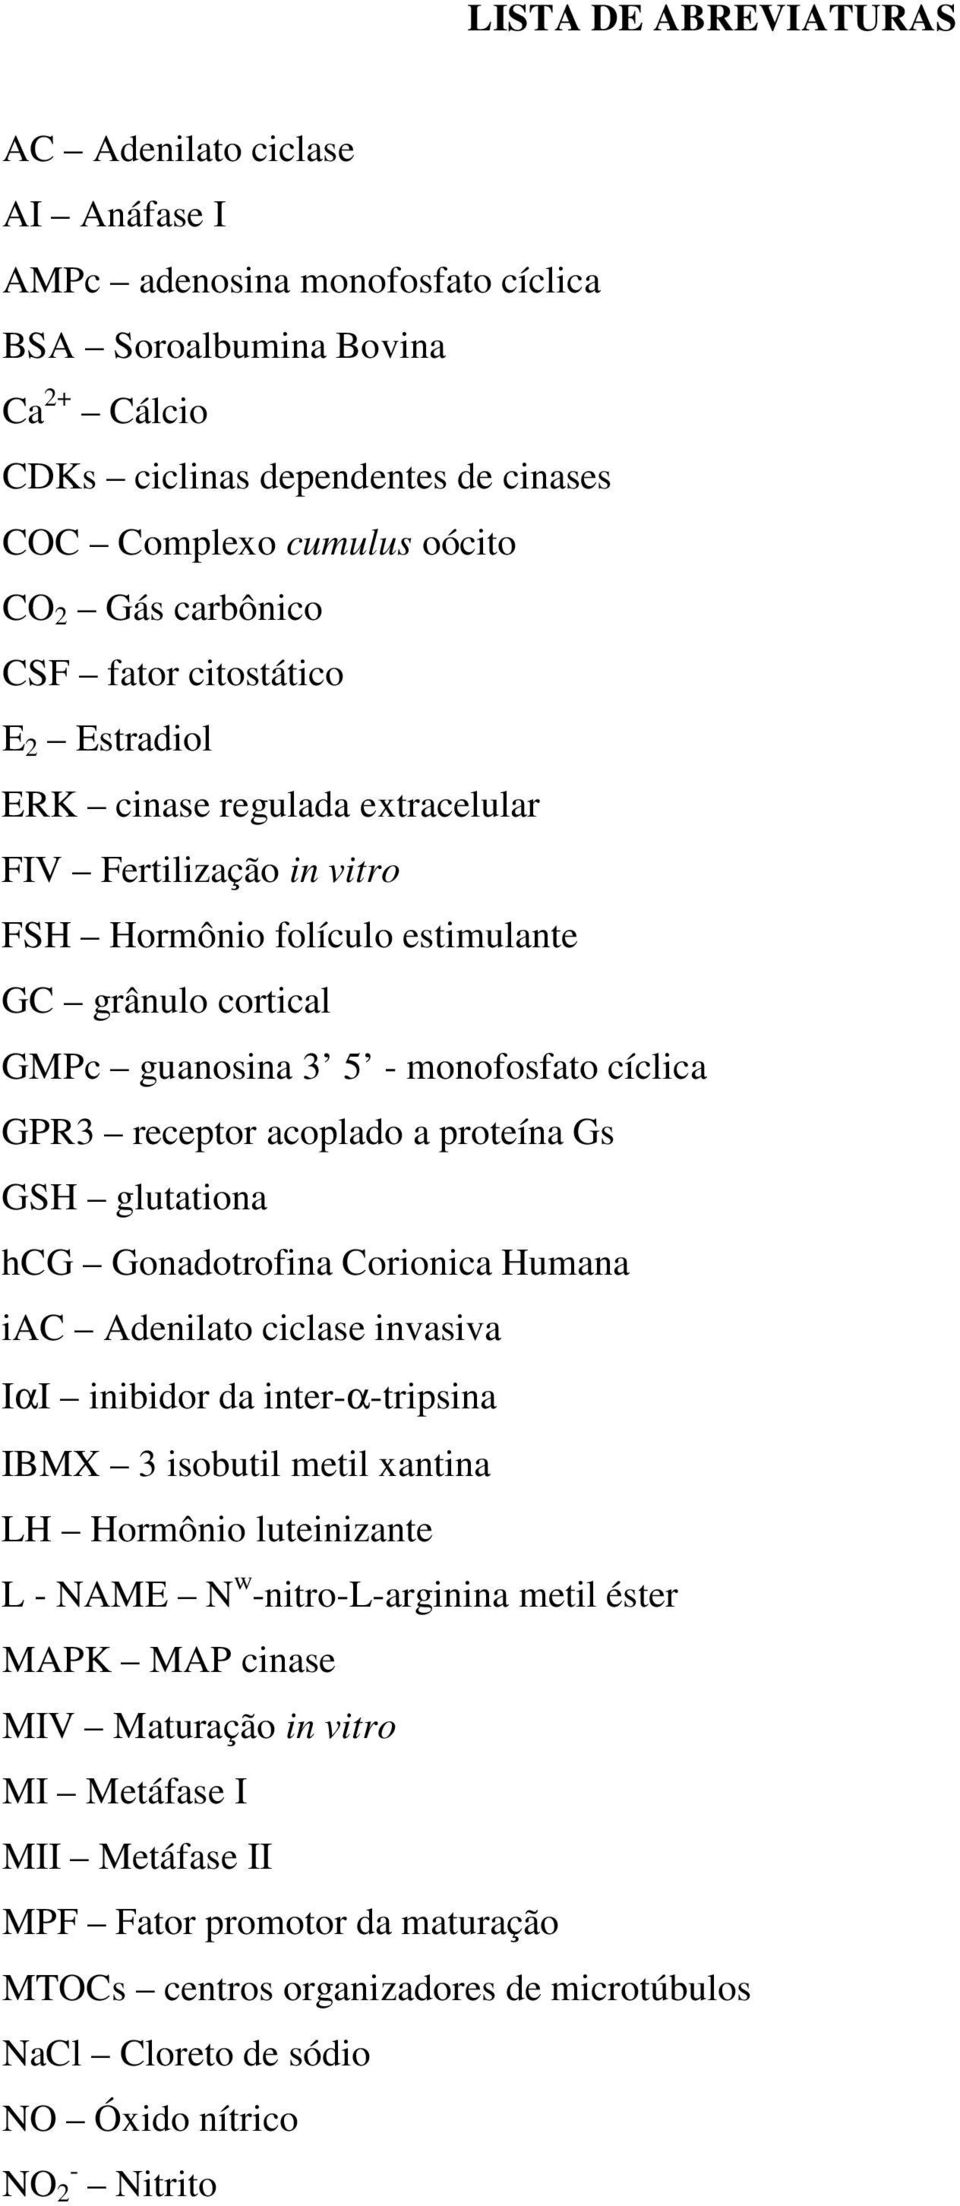 cíclica GPR3 receptor acoplado a proteína Gs GSH glutationa hcg Gonadotrofina Corionica Humana iac Adenilato ciclase invasiva IαI inibidor da inter-α-tripsina IBMX 3 isobutil metil xantina LH